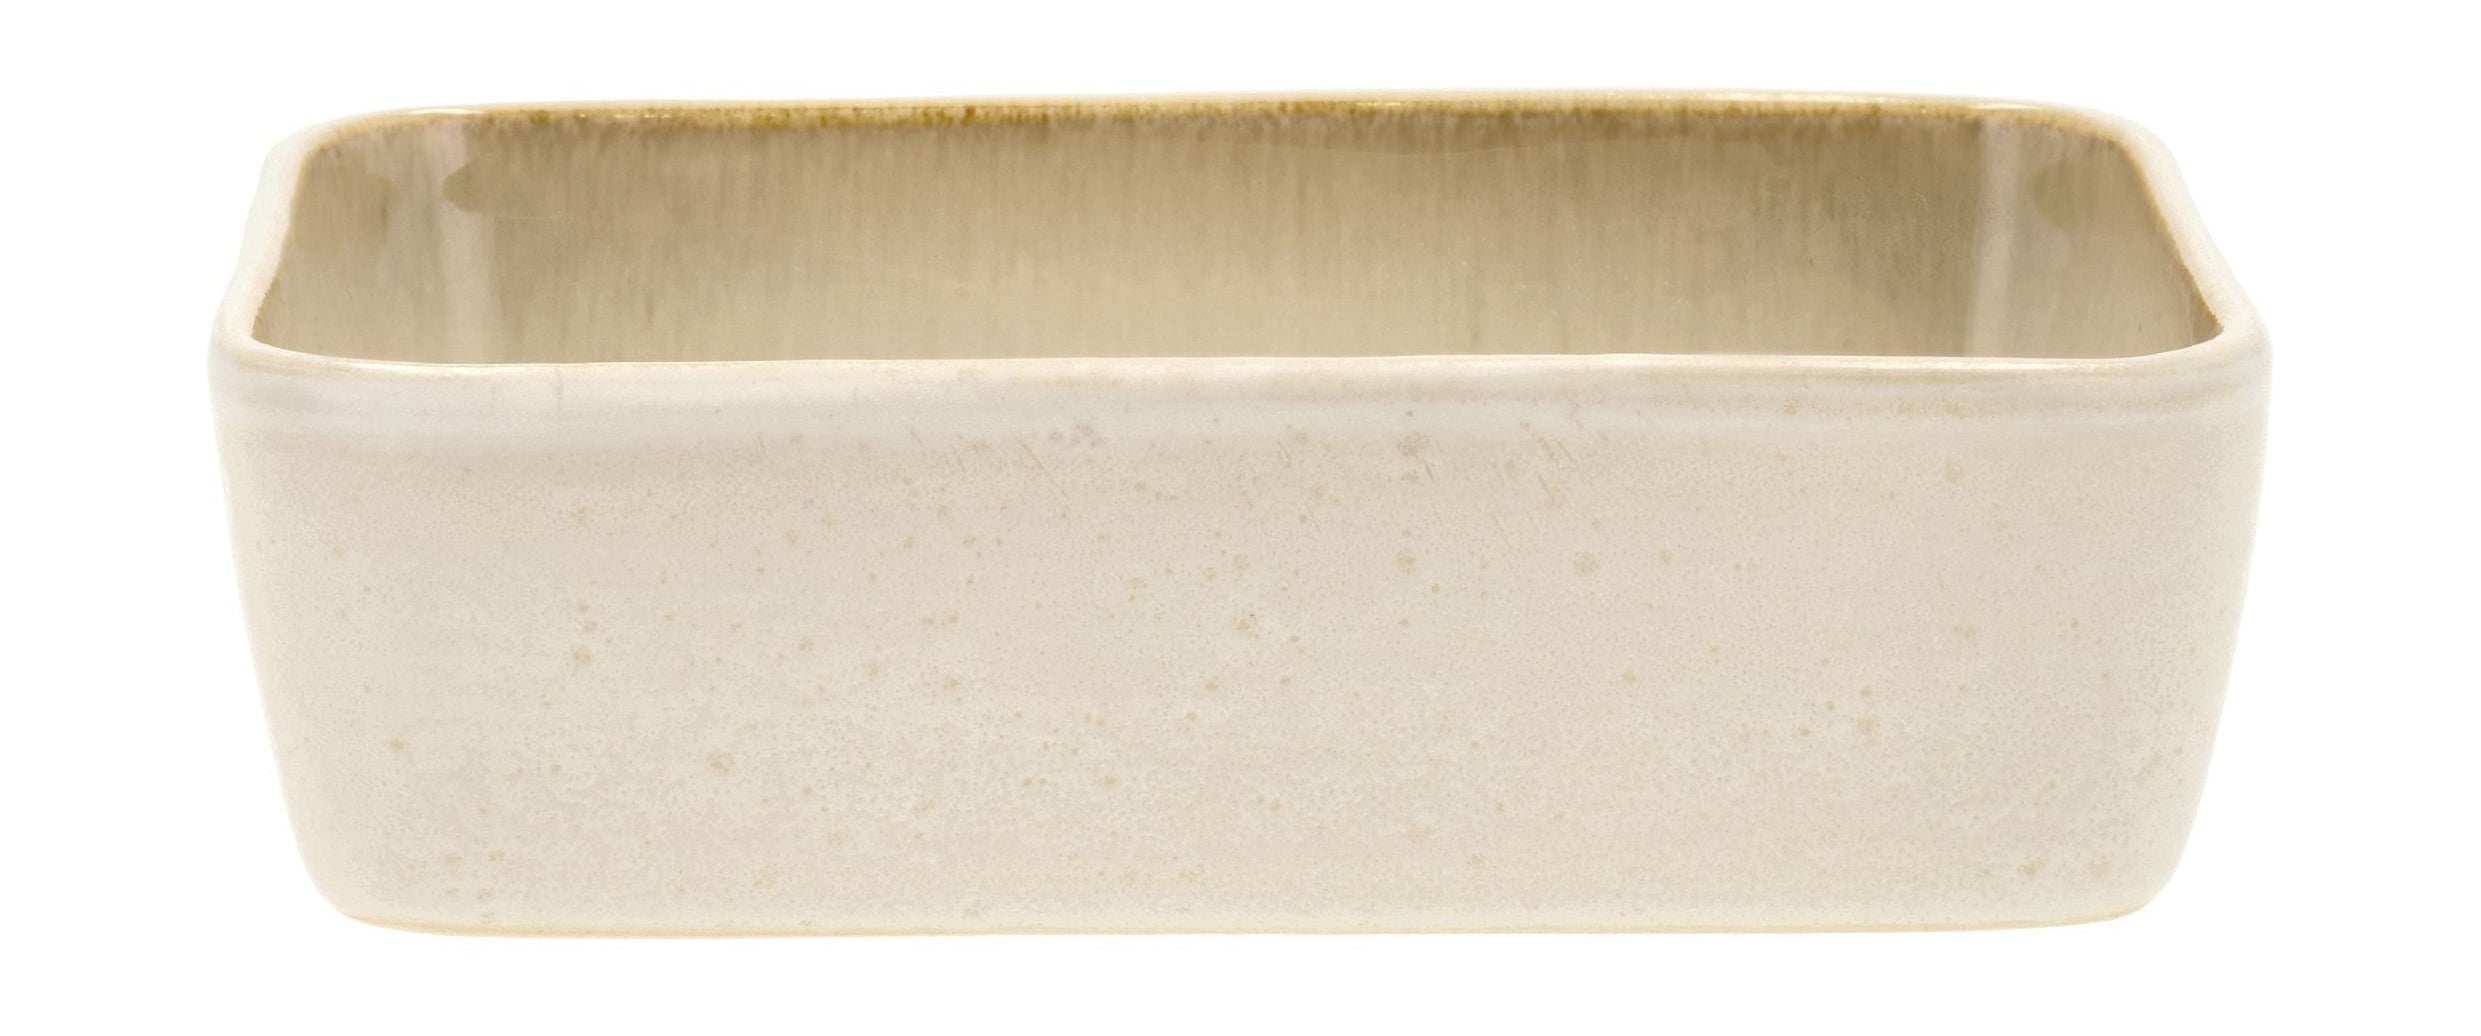 Bitz plato rectangular 19 x 14 x 5.3 cm, crema/crema